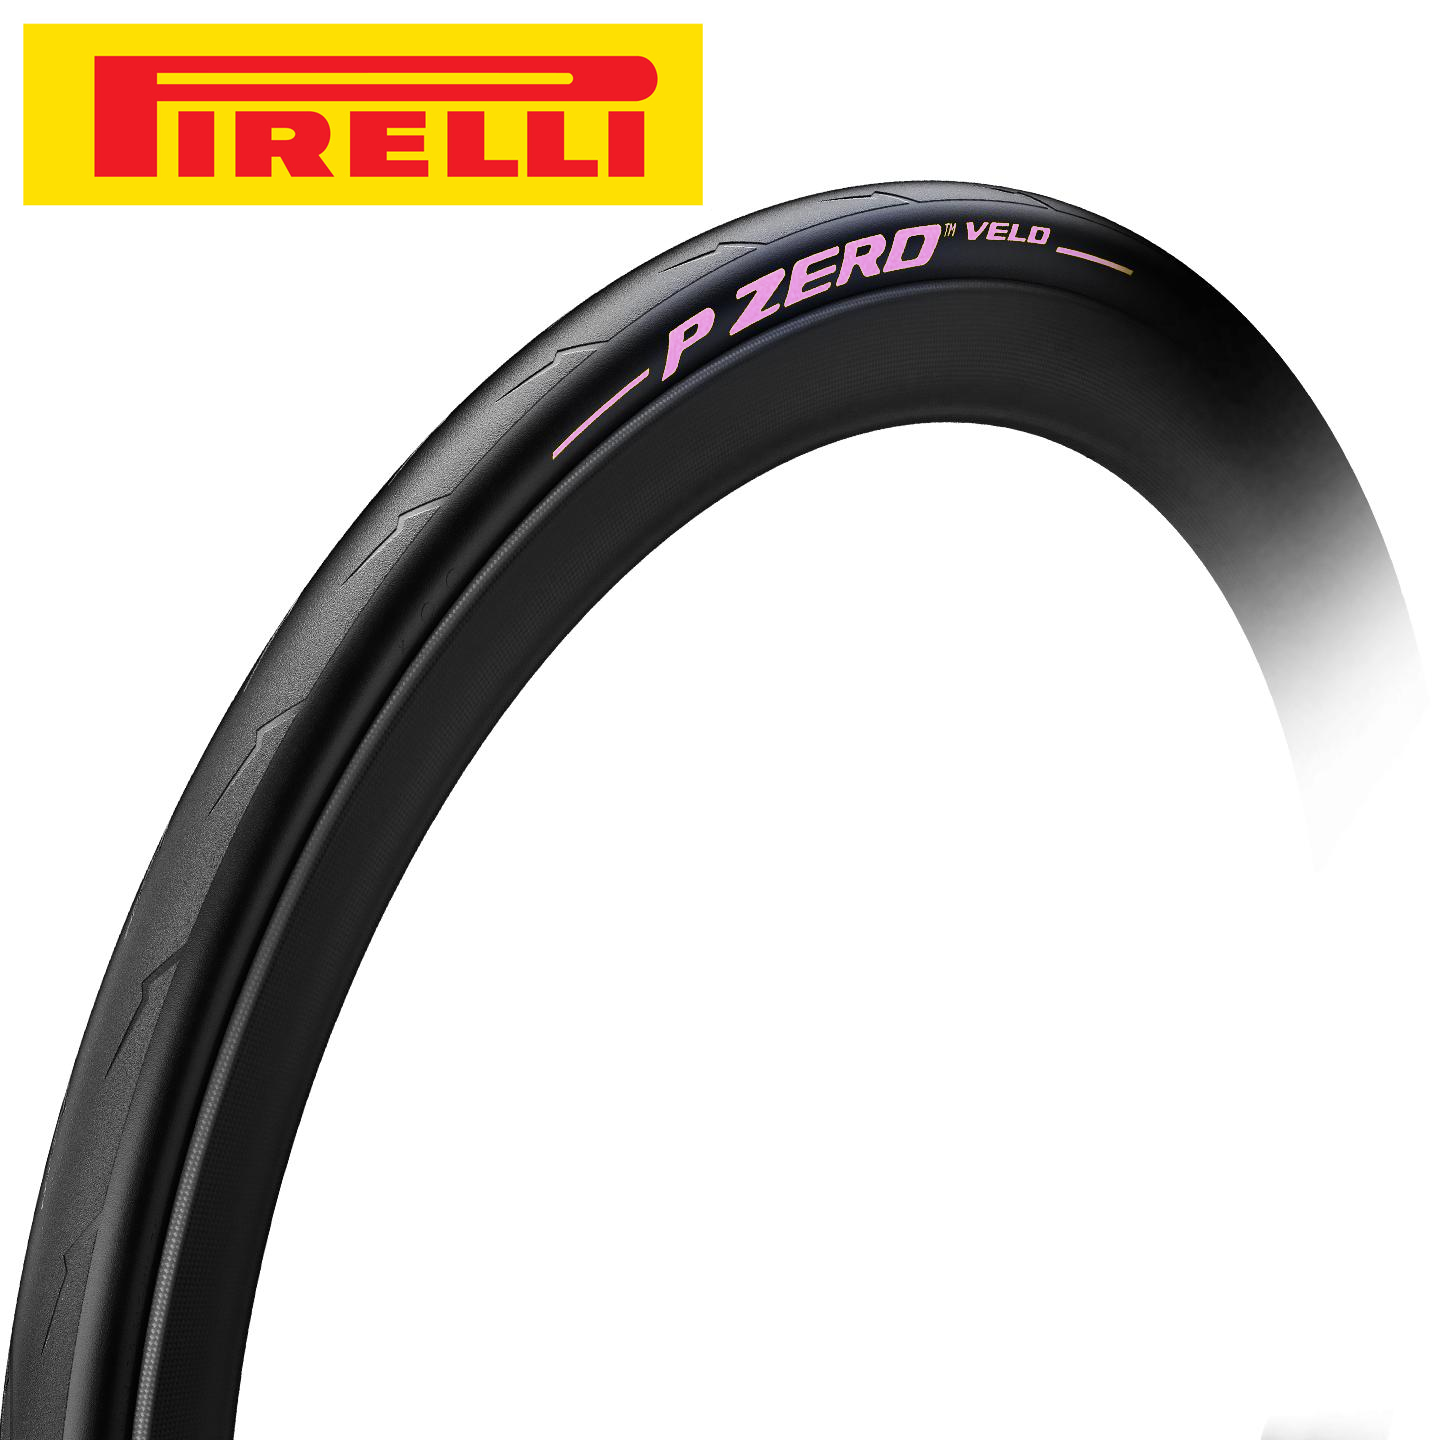 Reservedele - Cykeldæk - Pirelli P Zero Velo Pure Performance Color Edition 700x25c Foldedæk - Pink